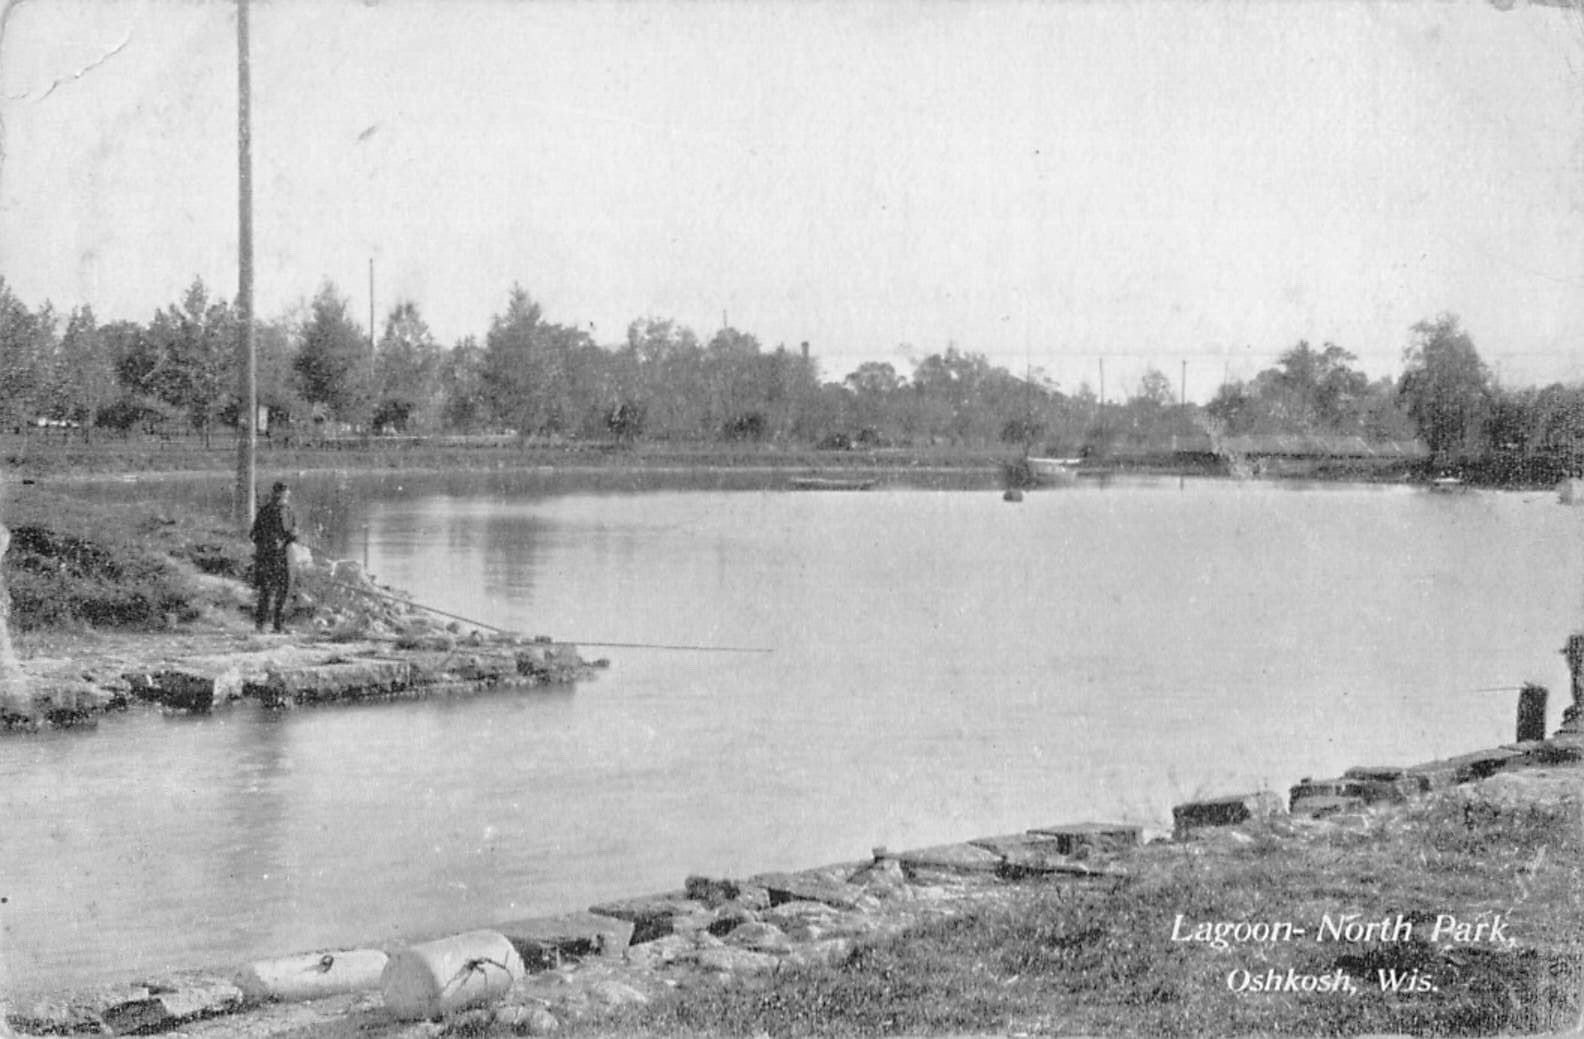 1910 Postcard of the Lagoon, North Park, Oshkosh, Wisconsin